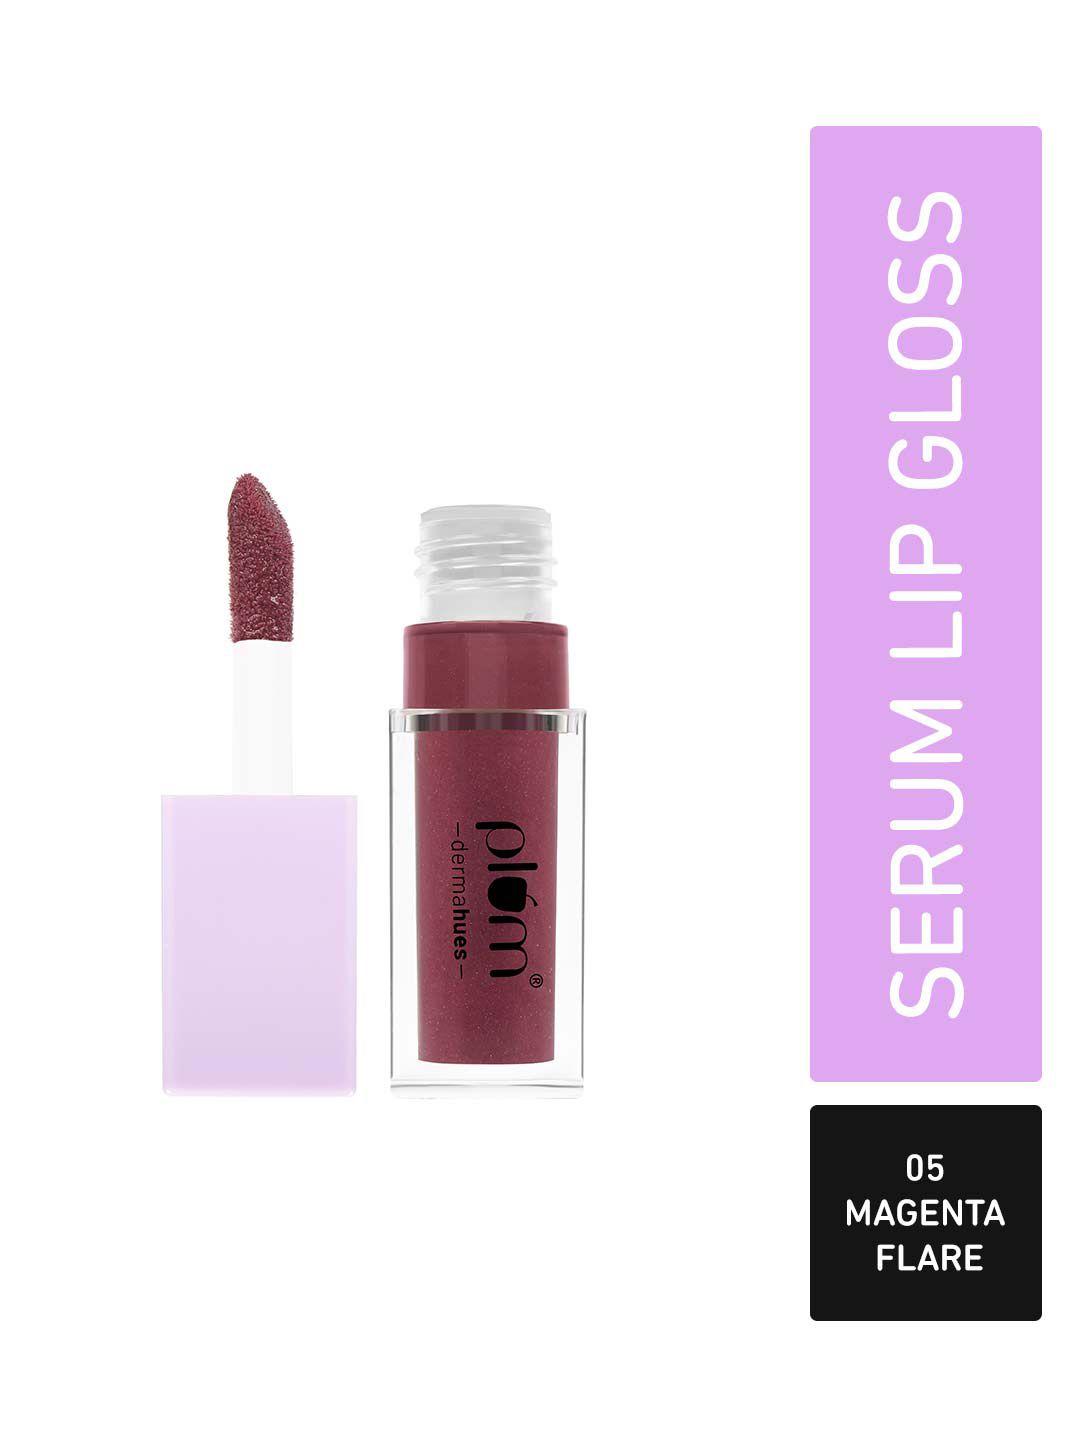 plum keep it glossy highly pigmented serum lip gloss - magenta flare 05